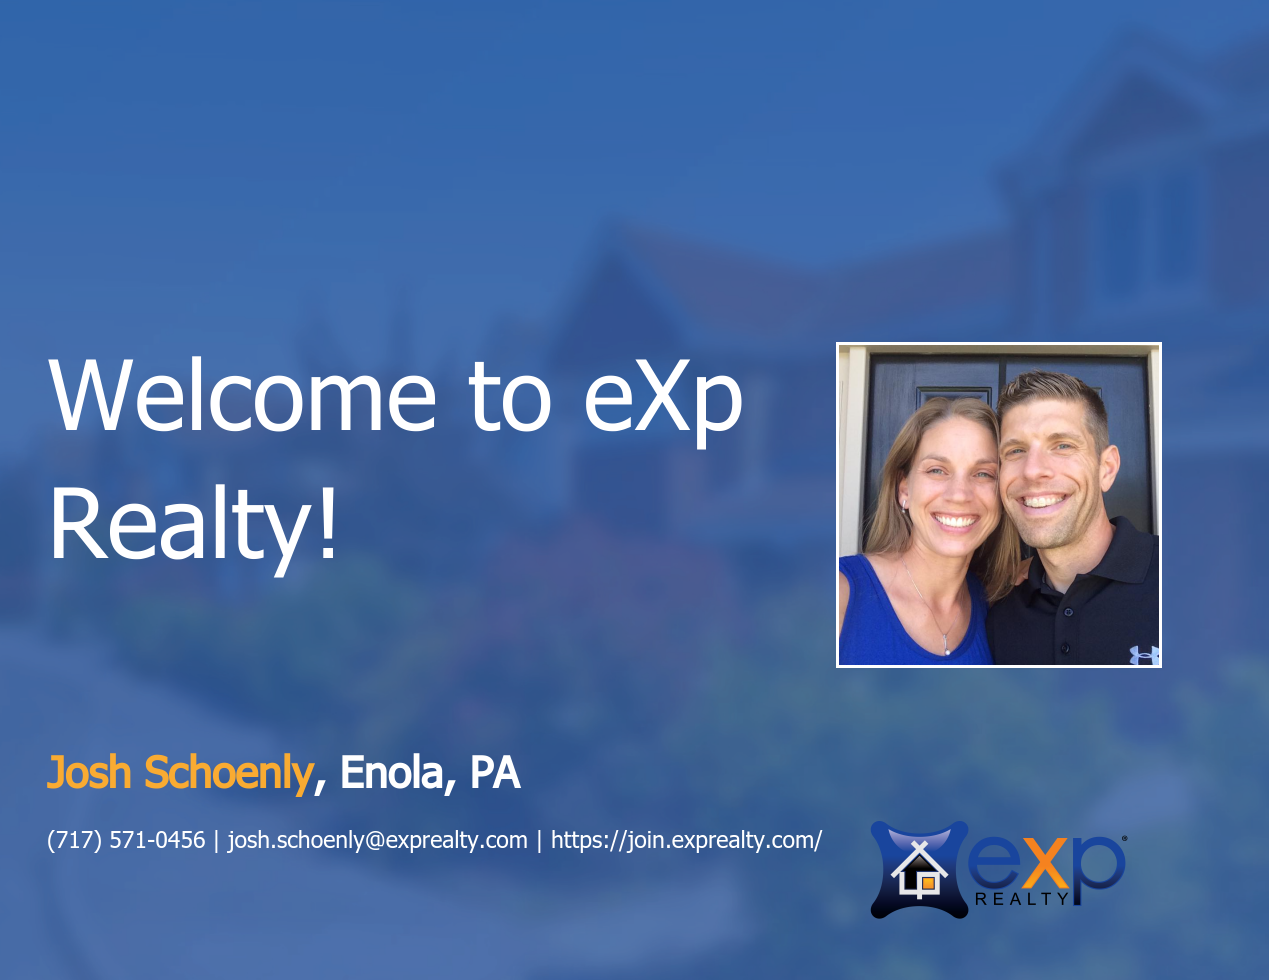 eXp Realty Welcomes Josh Schoenly!